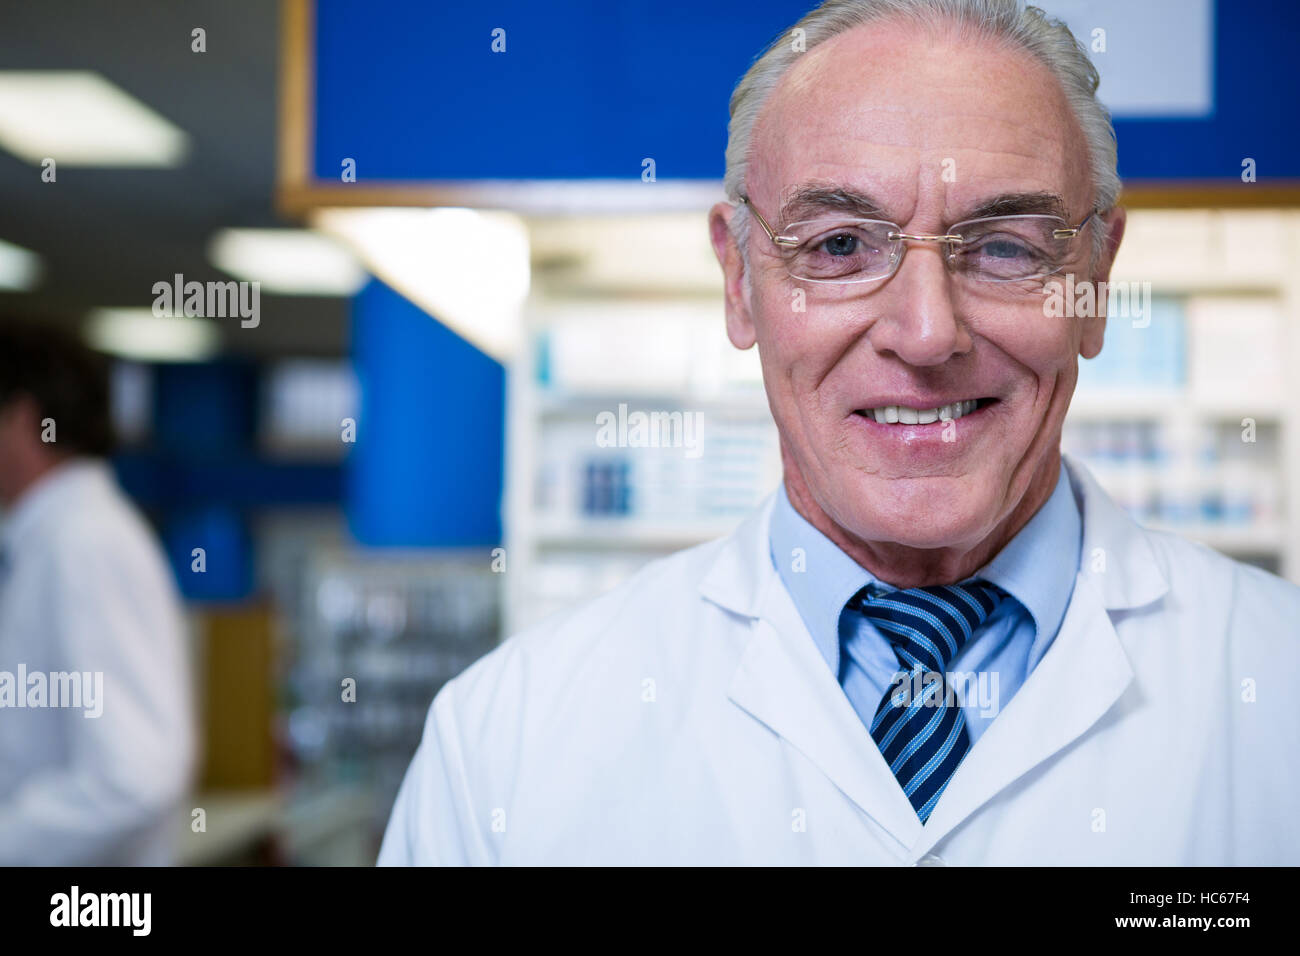 Pharmacist in lab coat Stock Photo - Alamy